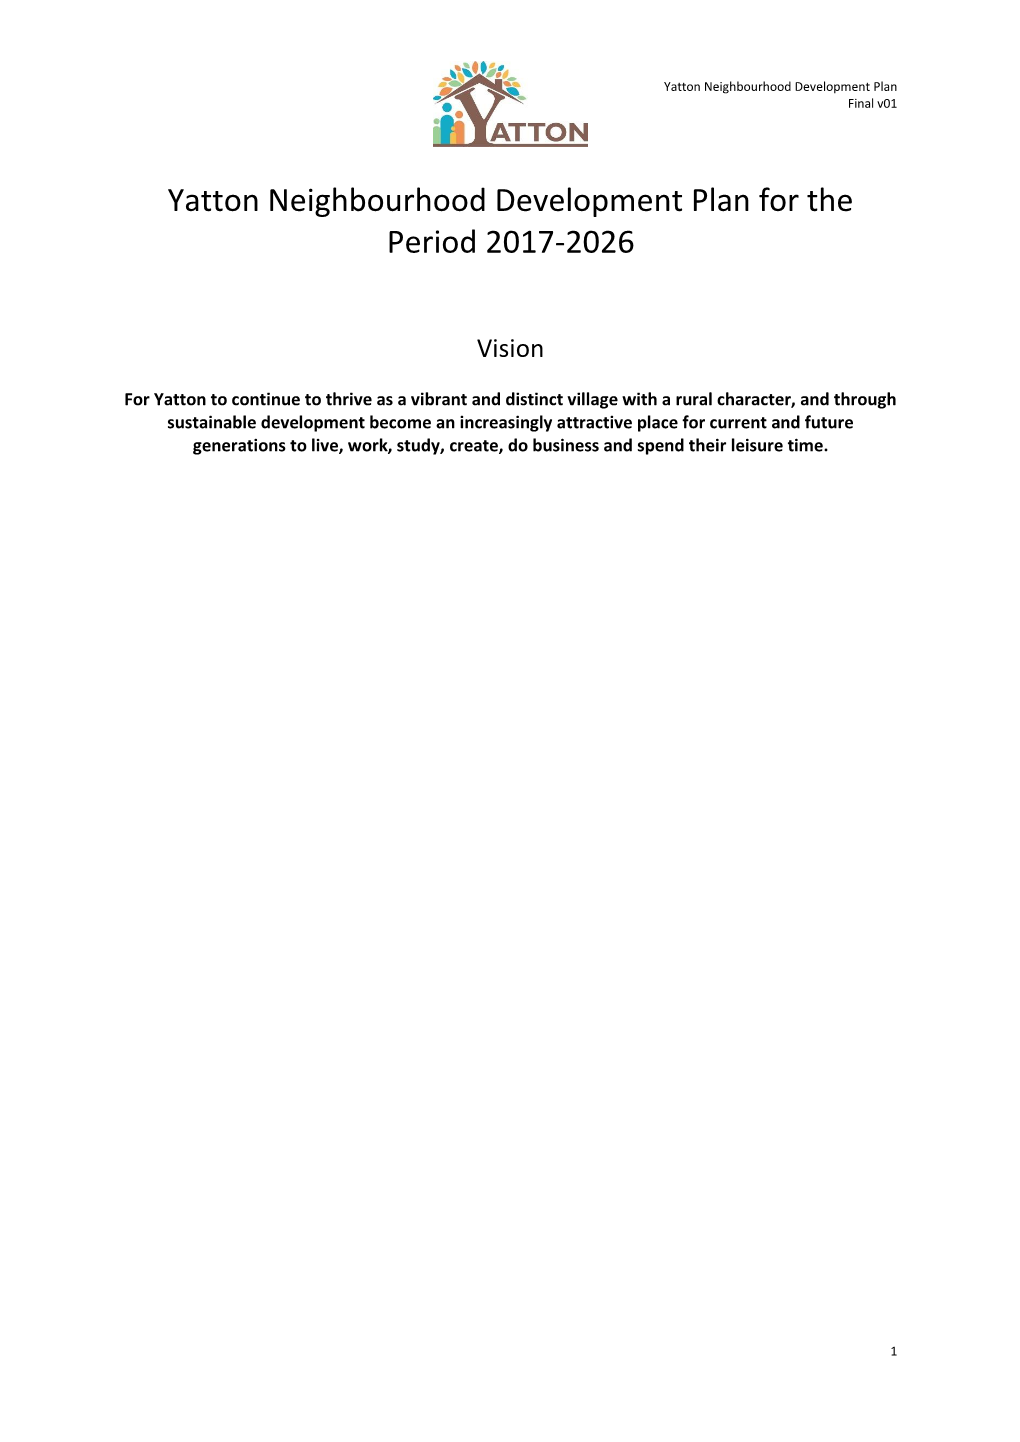 Yatton Neighbourhood Development Plan for the Period 2017-2026